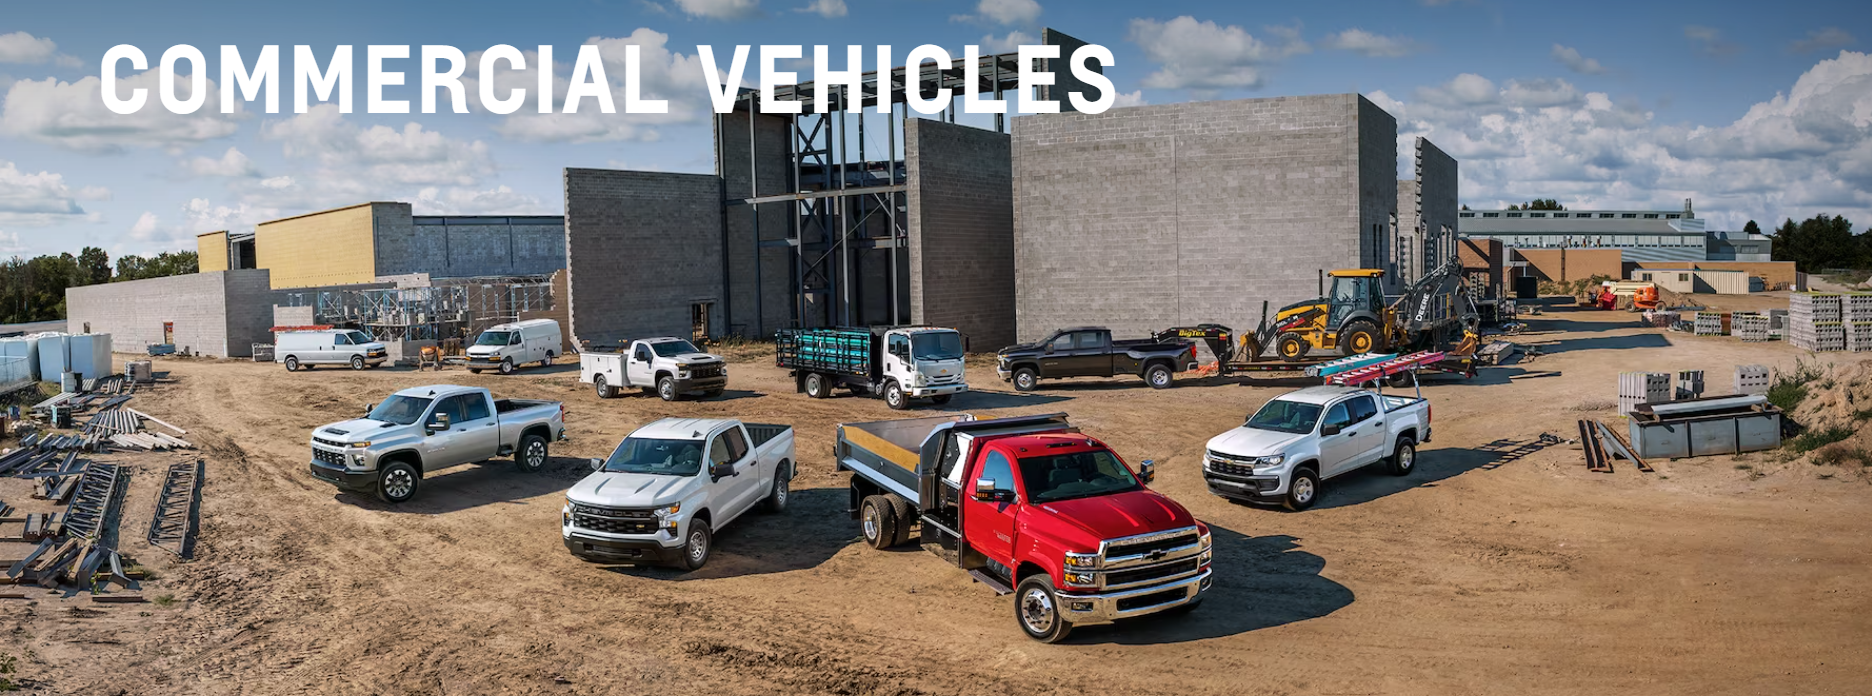 Chevrolet Commercial Vehicle Sales Near Dallas TX